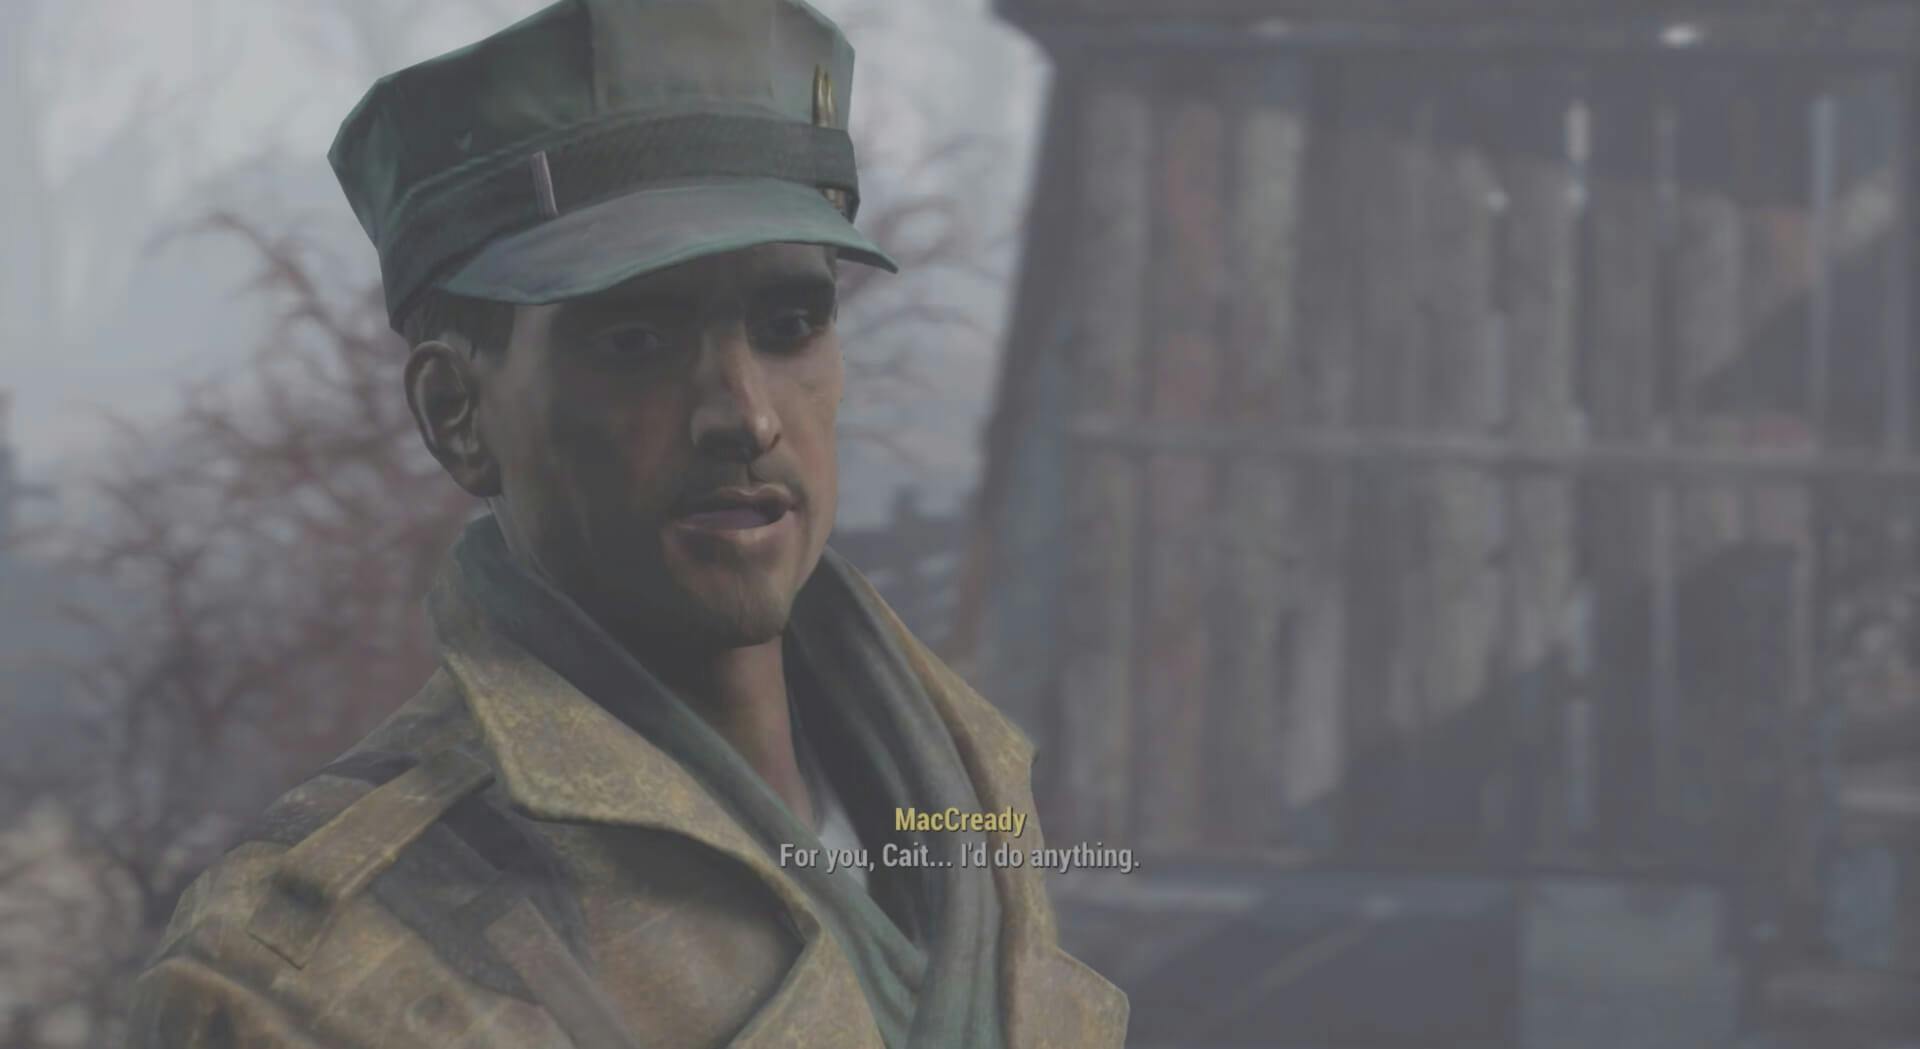 Fallout 4 - MacCready